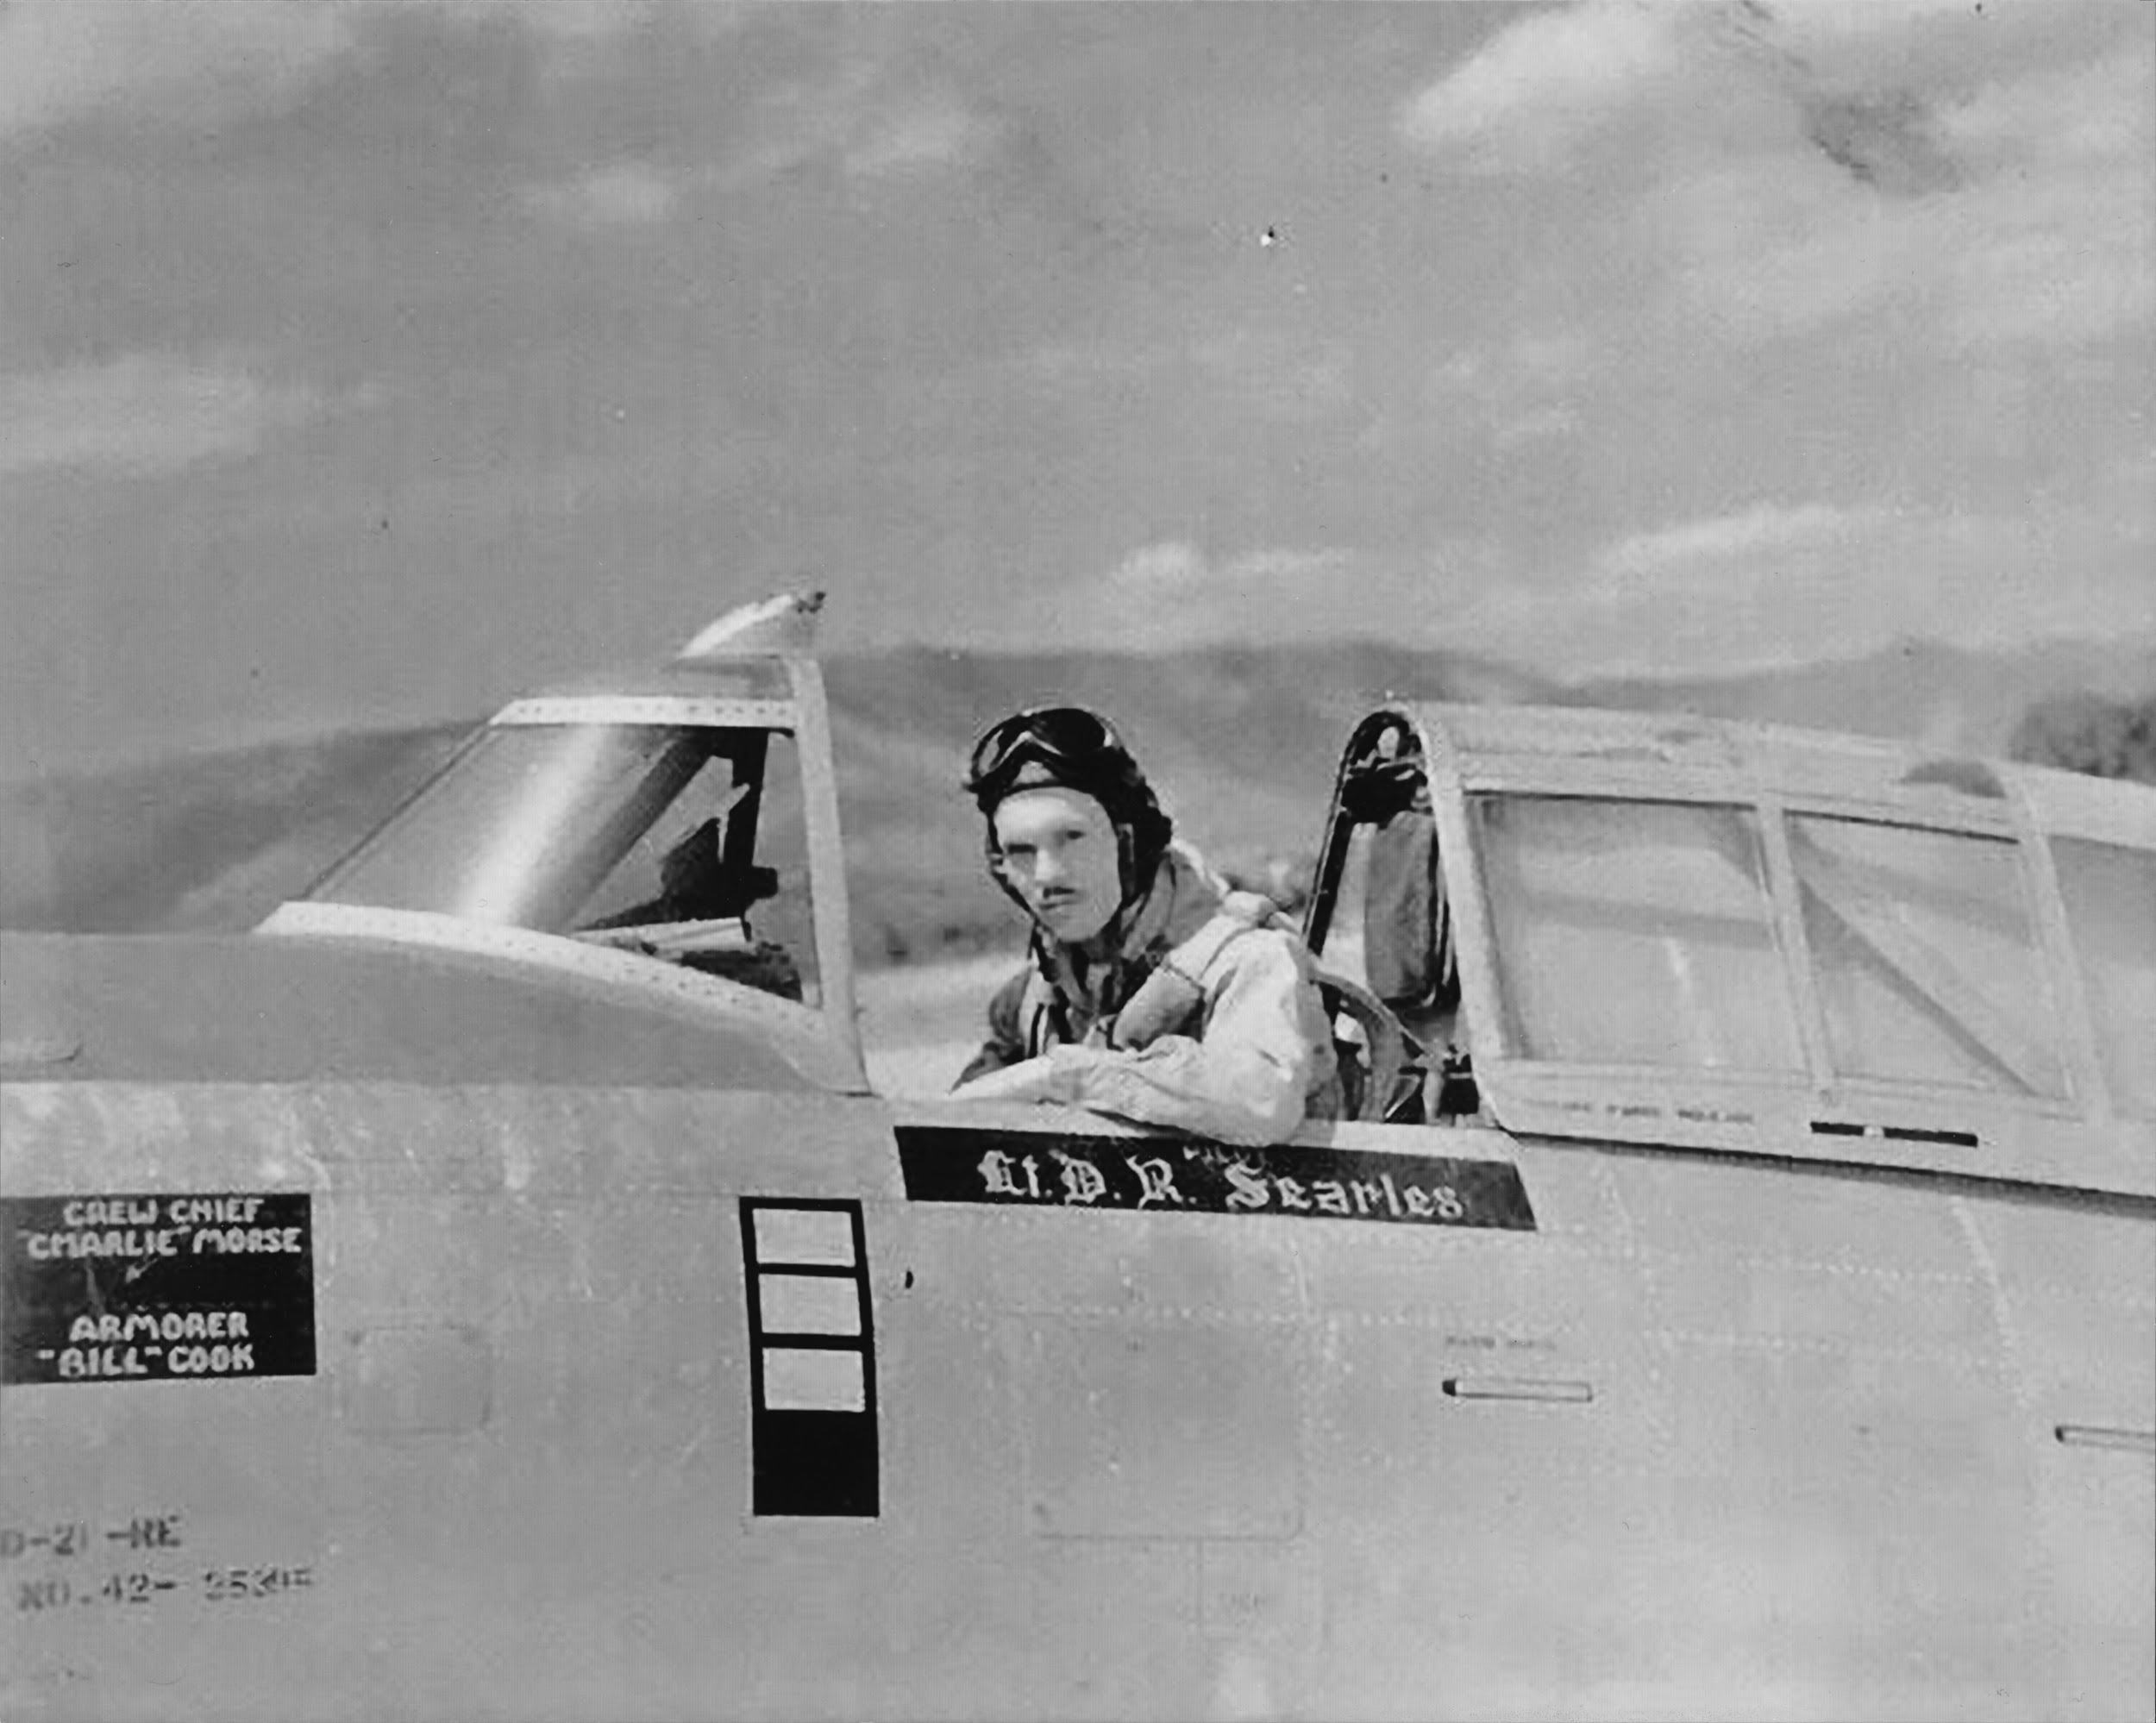 P-47: Major General DeWitt Searles